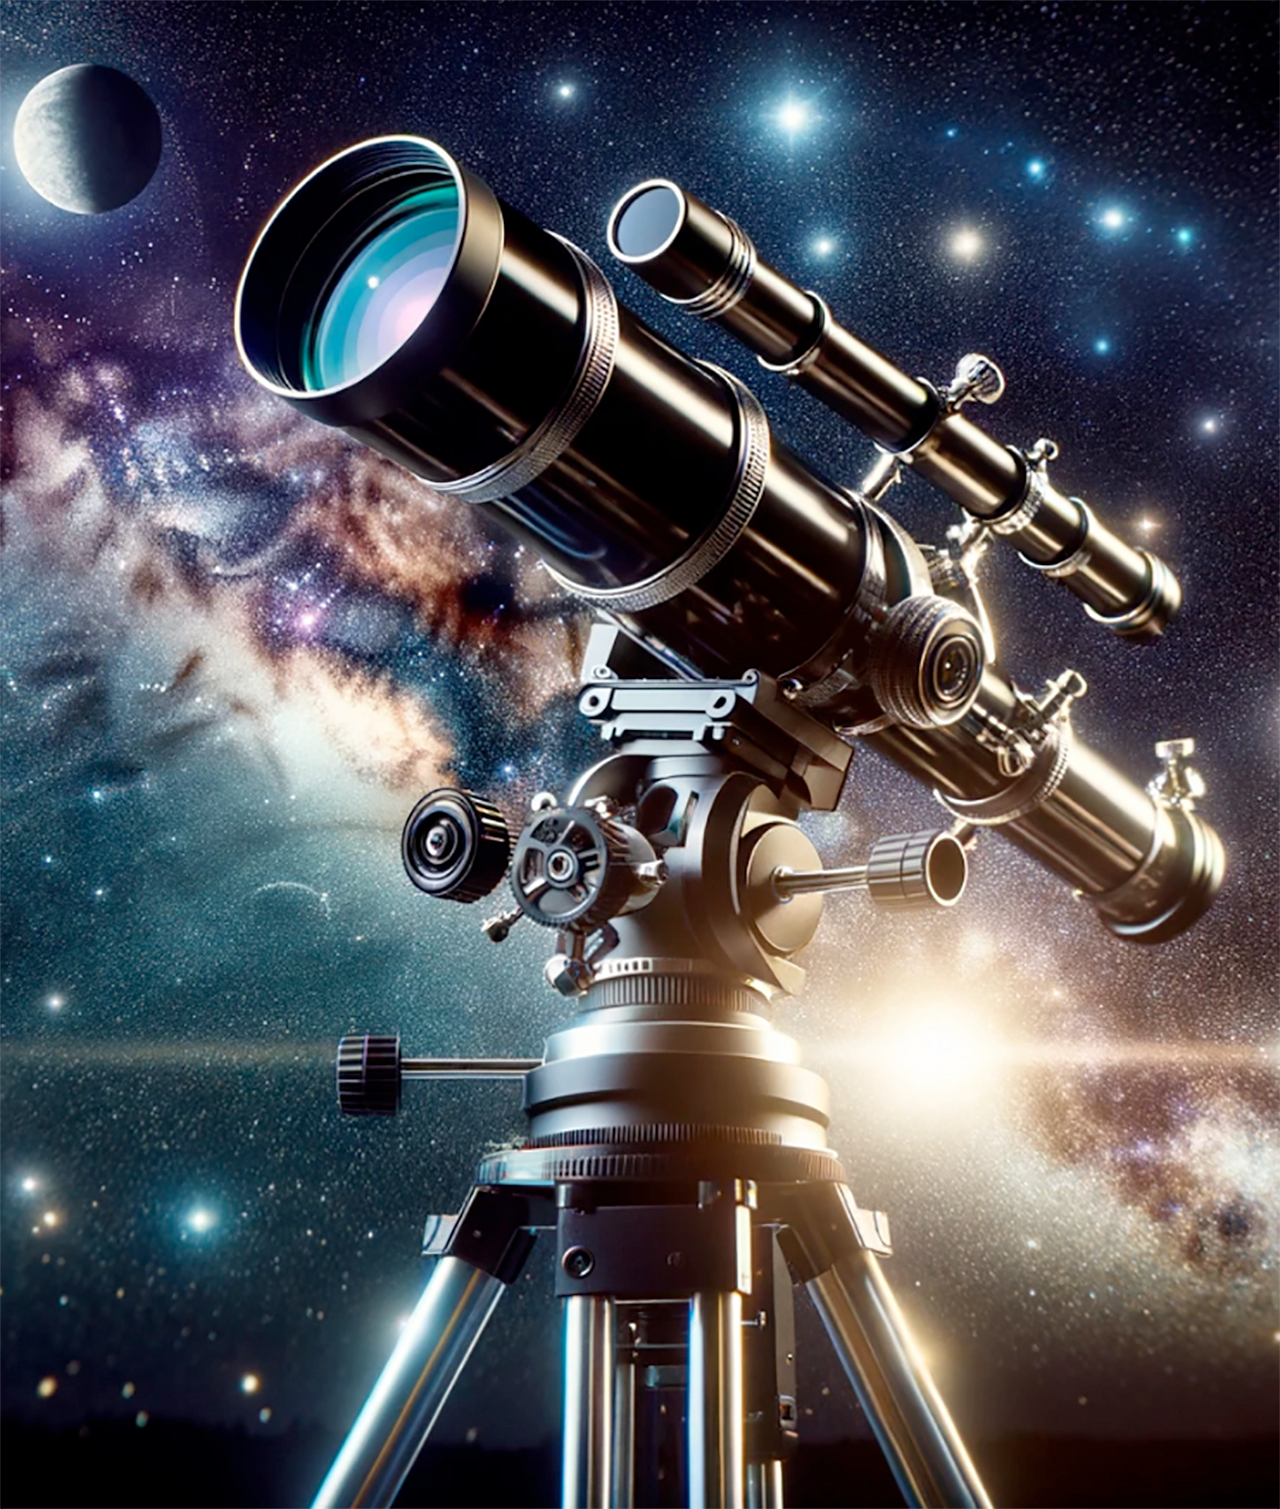 1280x1509px-Telescope-vWA24